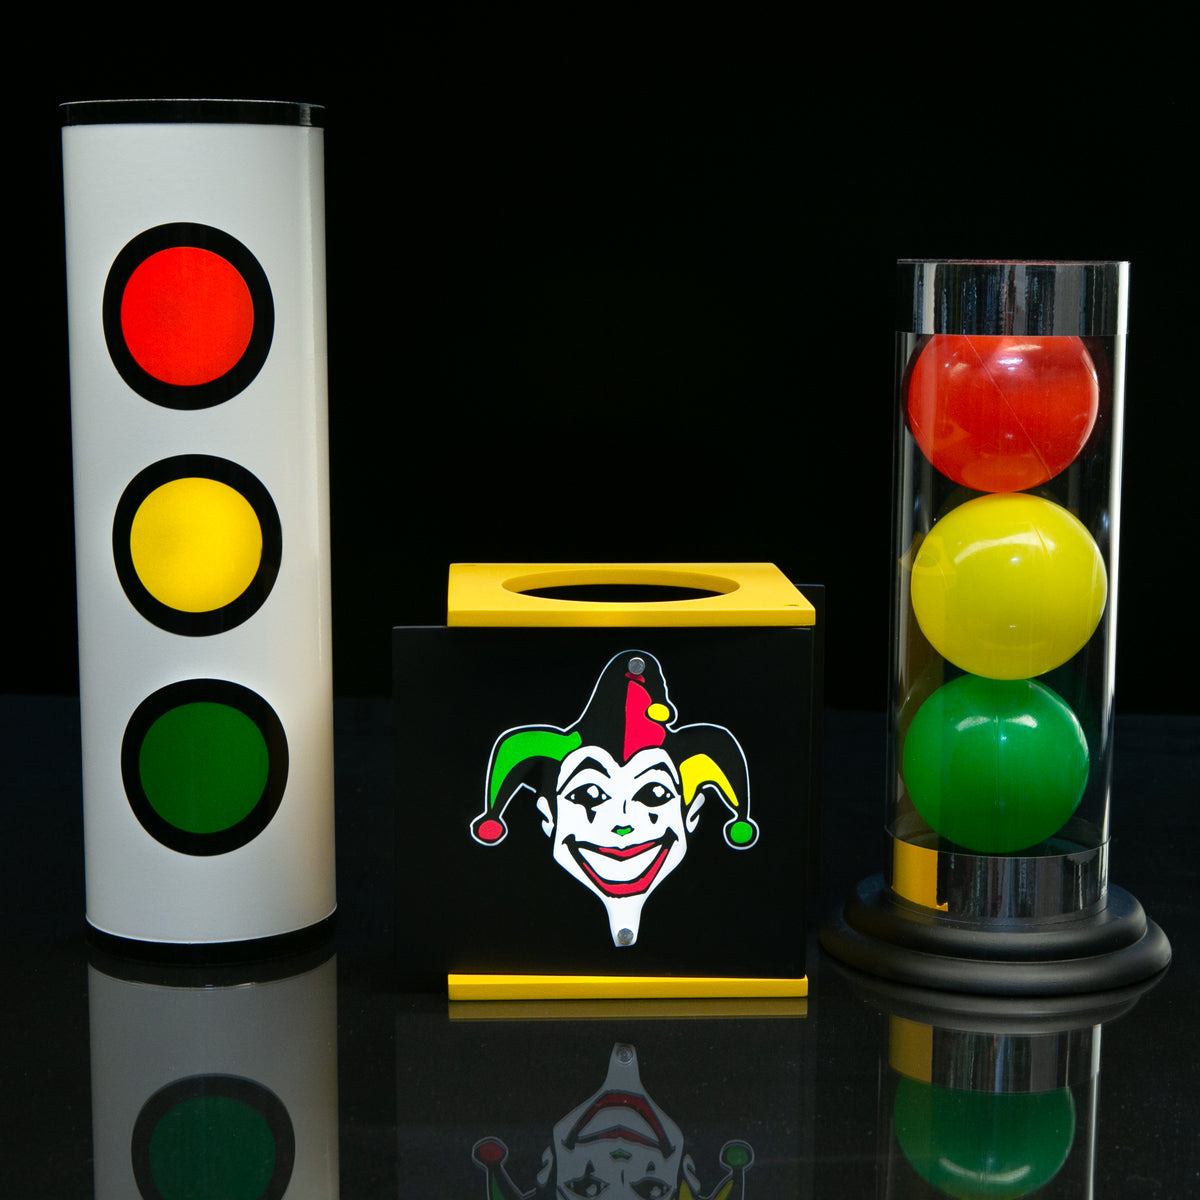 Joker Tube Professional Magician Model By Magic Makers